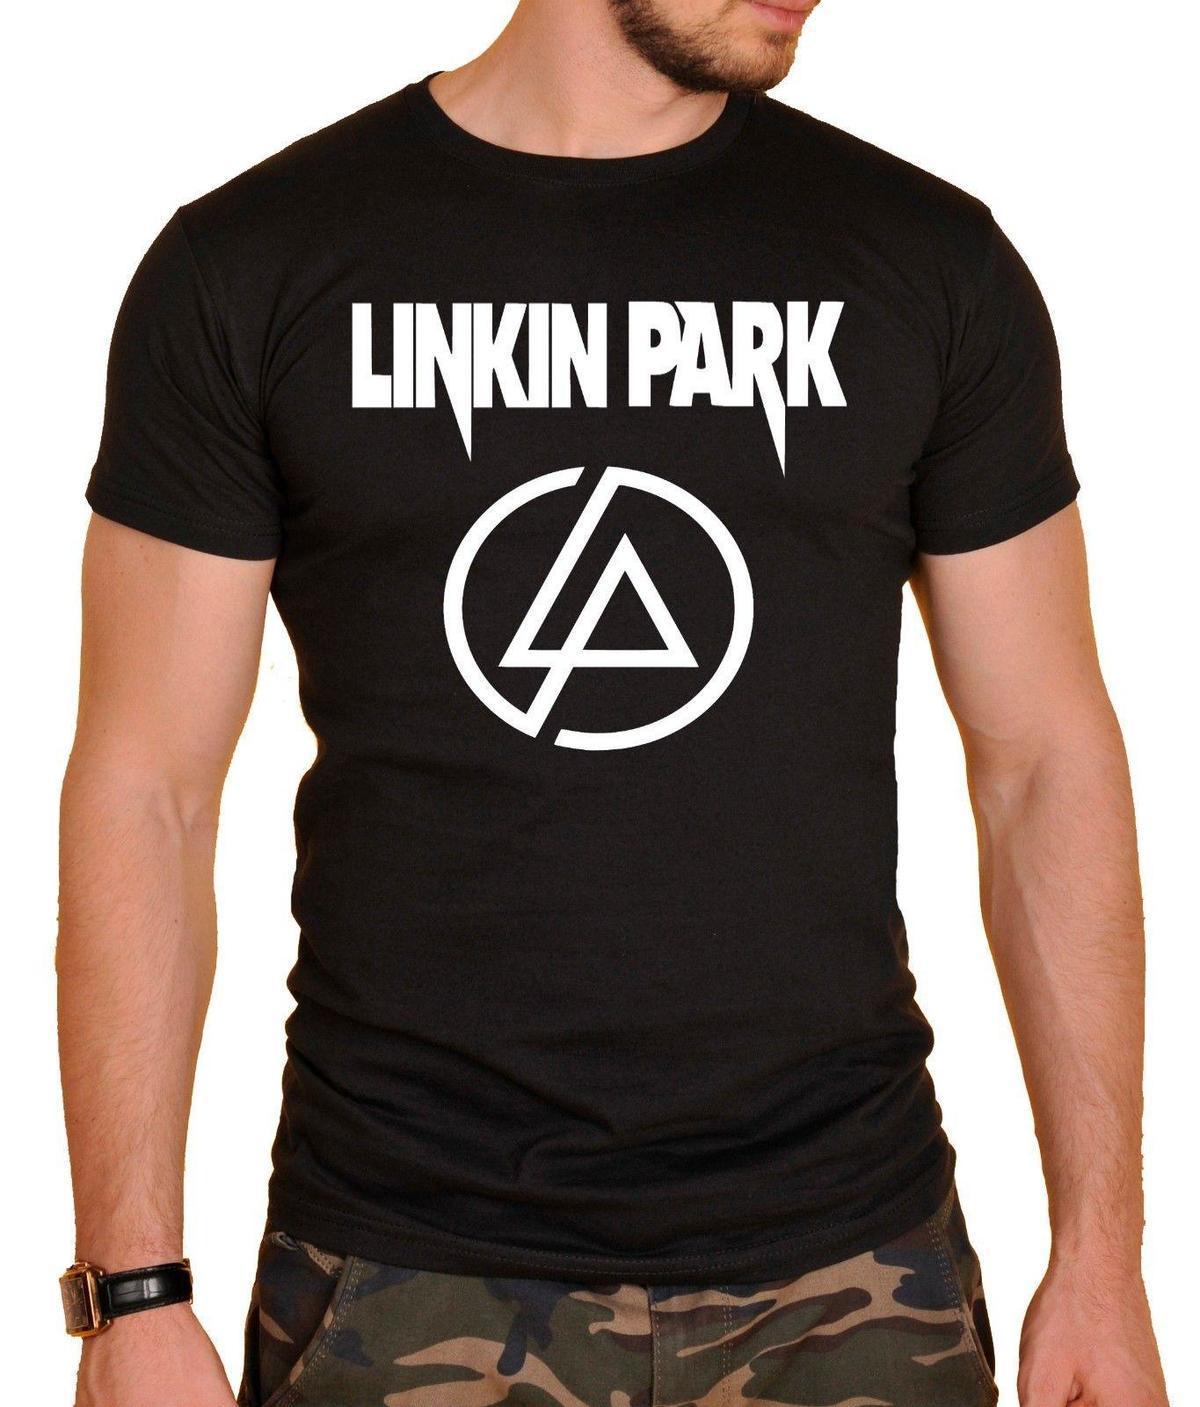 New Linkin Park Logo - Linkin Park Logo Cars T Shirt Black New Mens T Shirts Funny Shirts